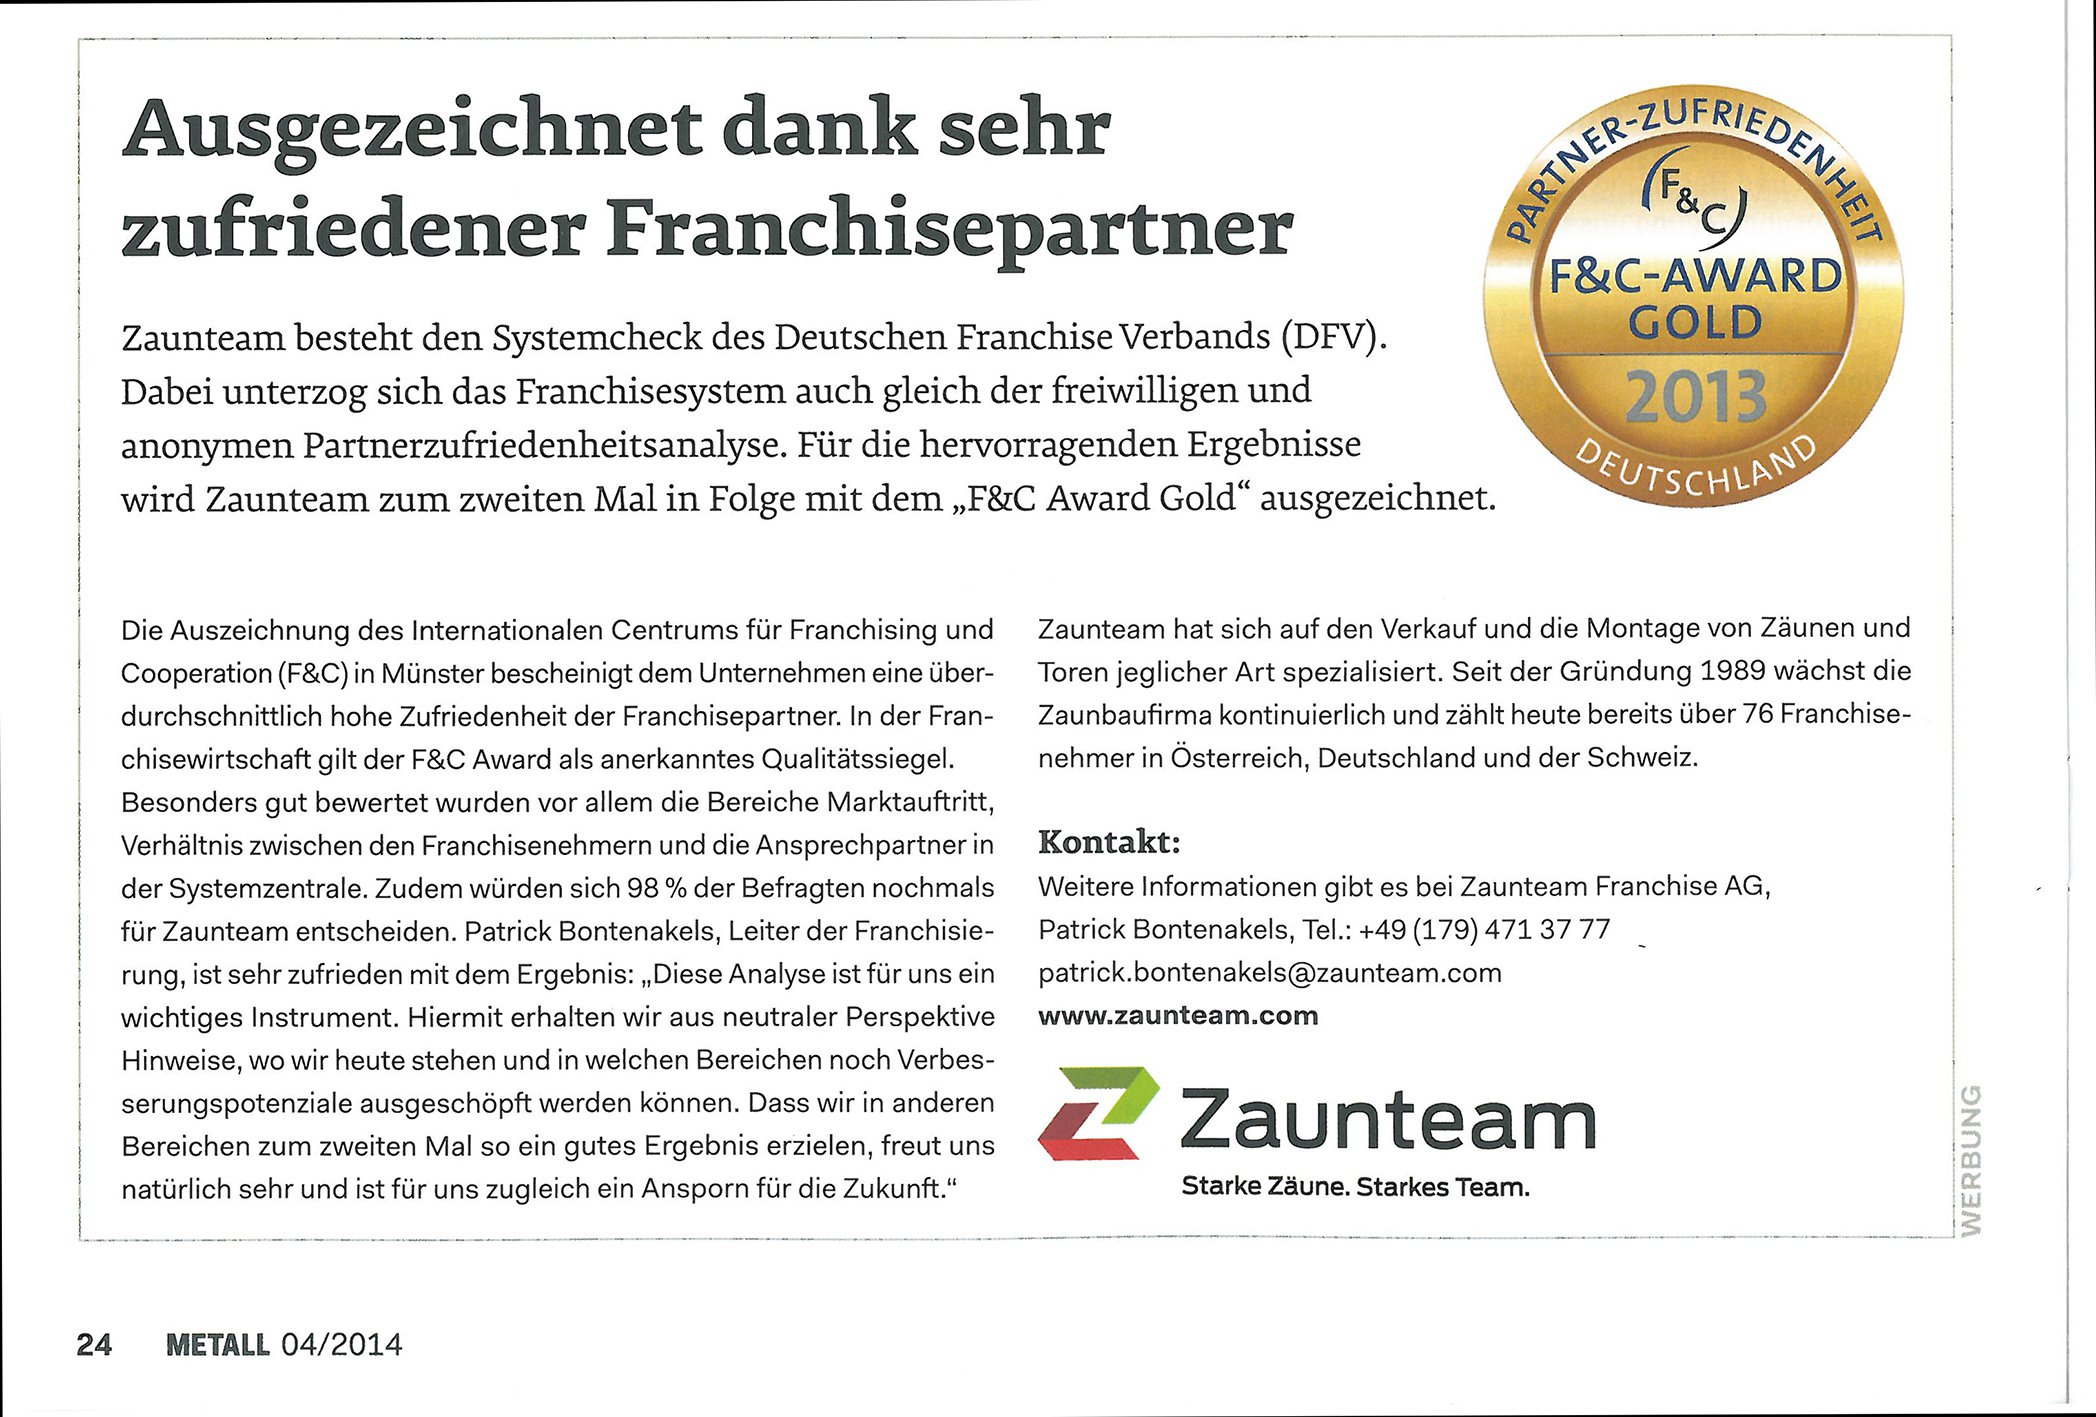 Metall Fachmagazin - Zaunteam besteht den Systemcheck des DFV April 2014